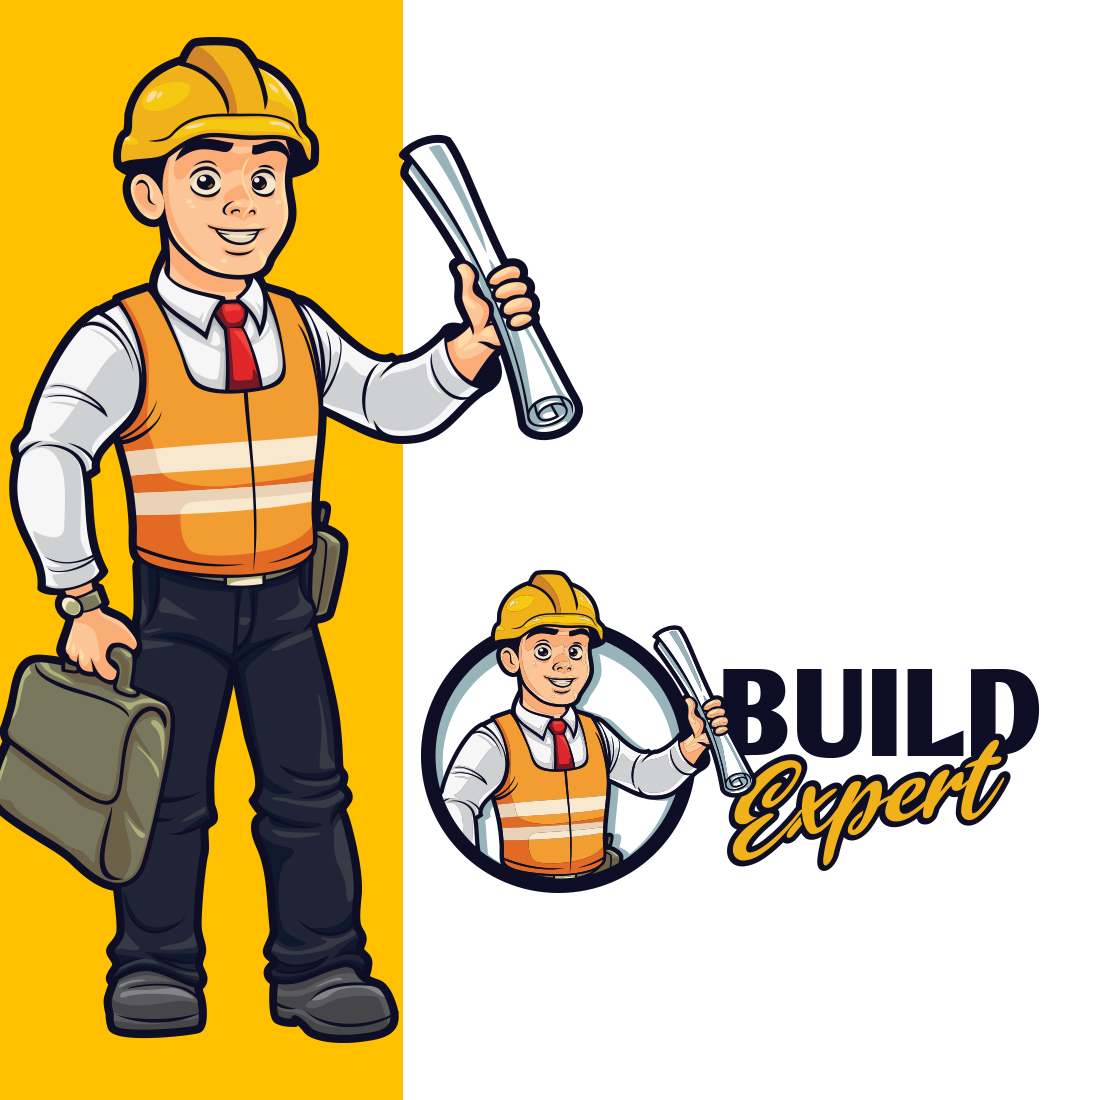 Builder Expert Character Mascot Logo Design cover image.